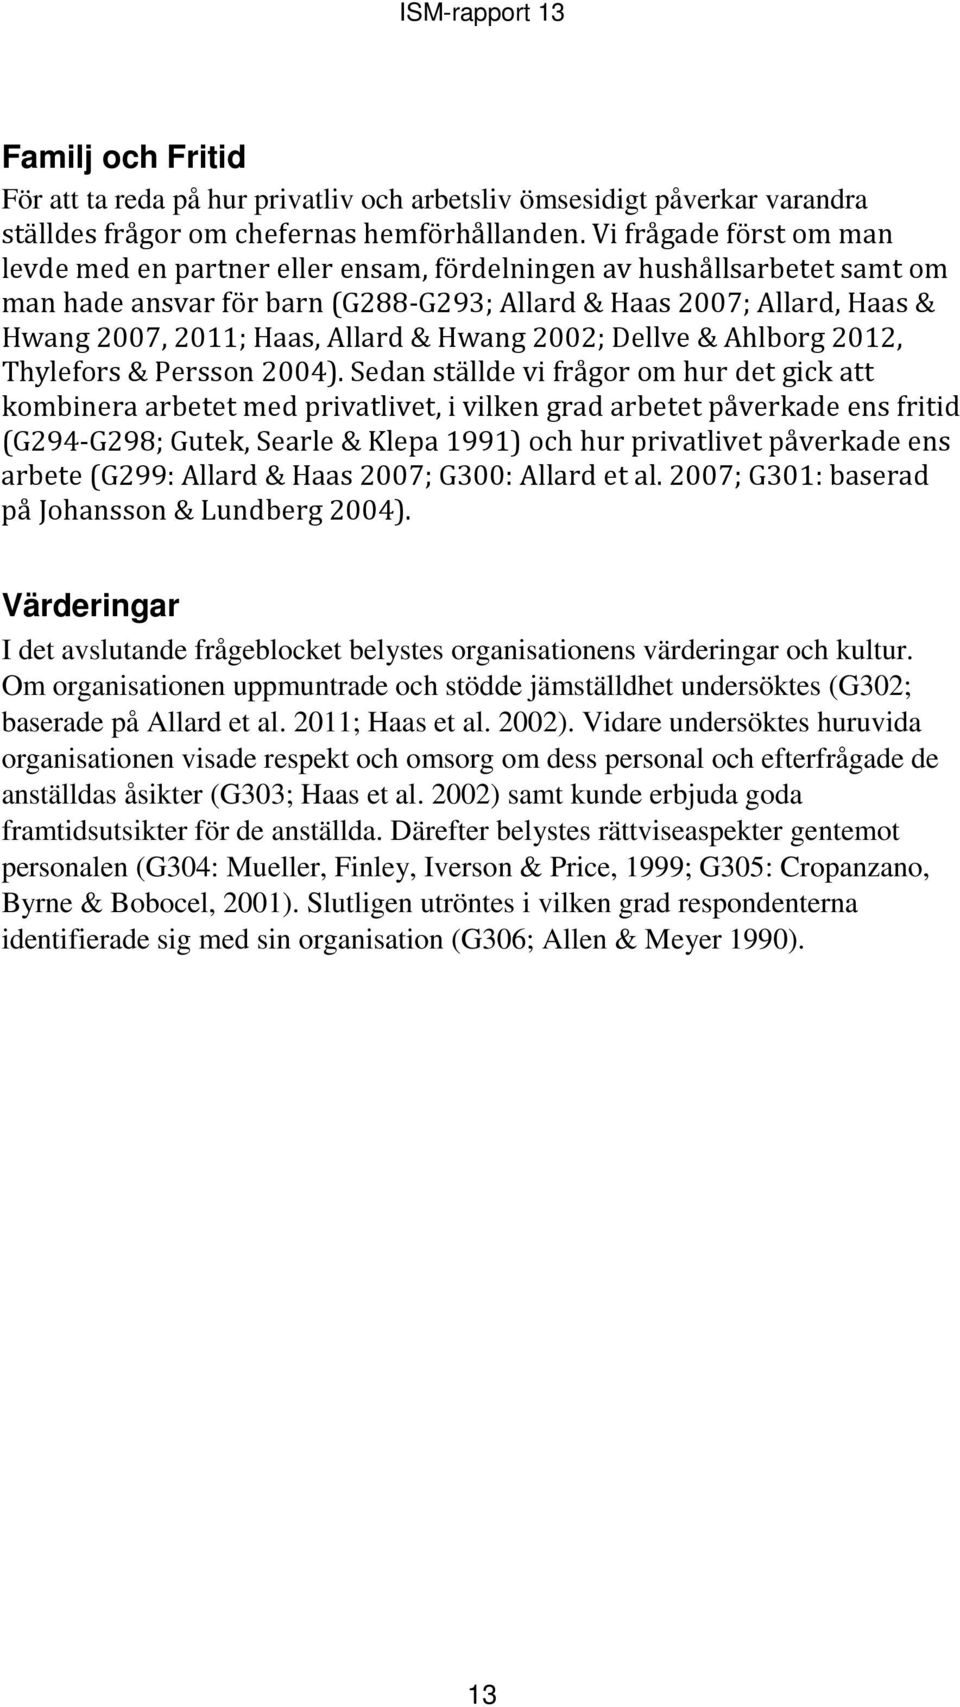 Allard & Hwang 2002; Dellve & Ahlborg 2012, Thylefors & Persson 2004).